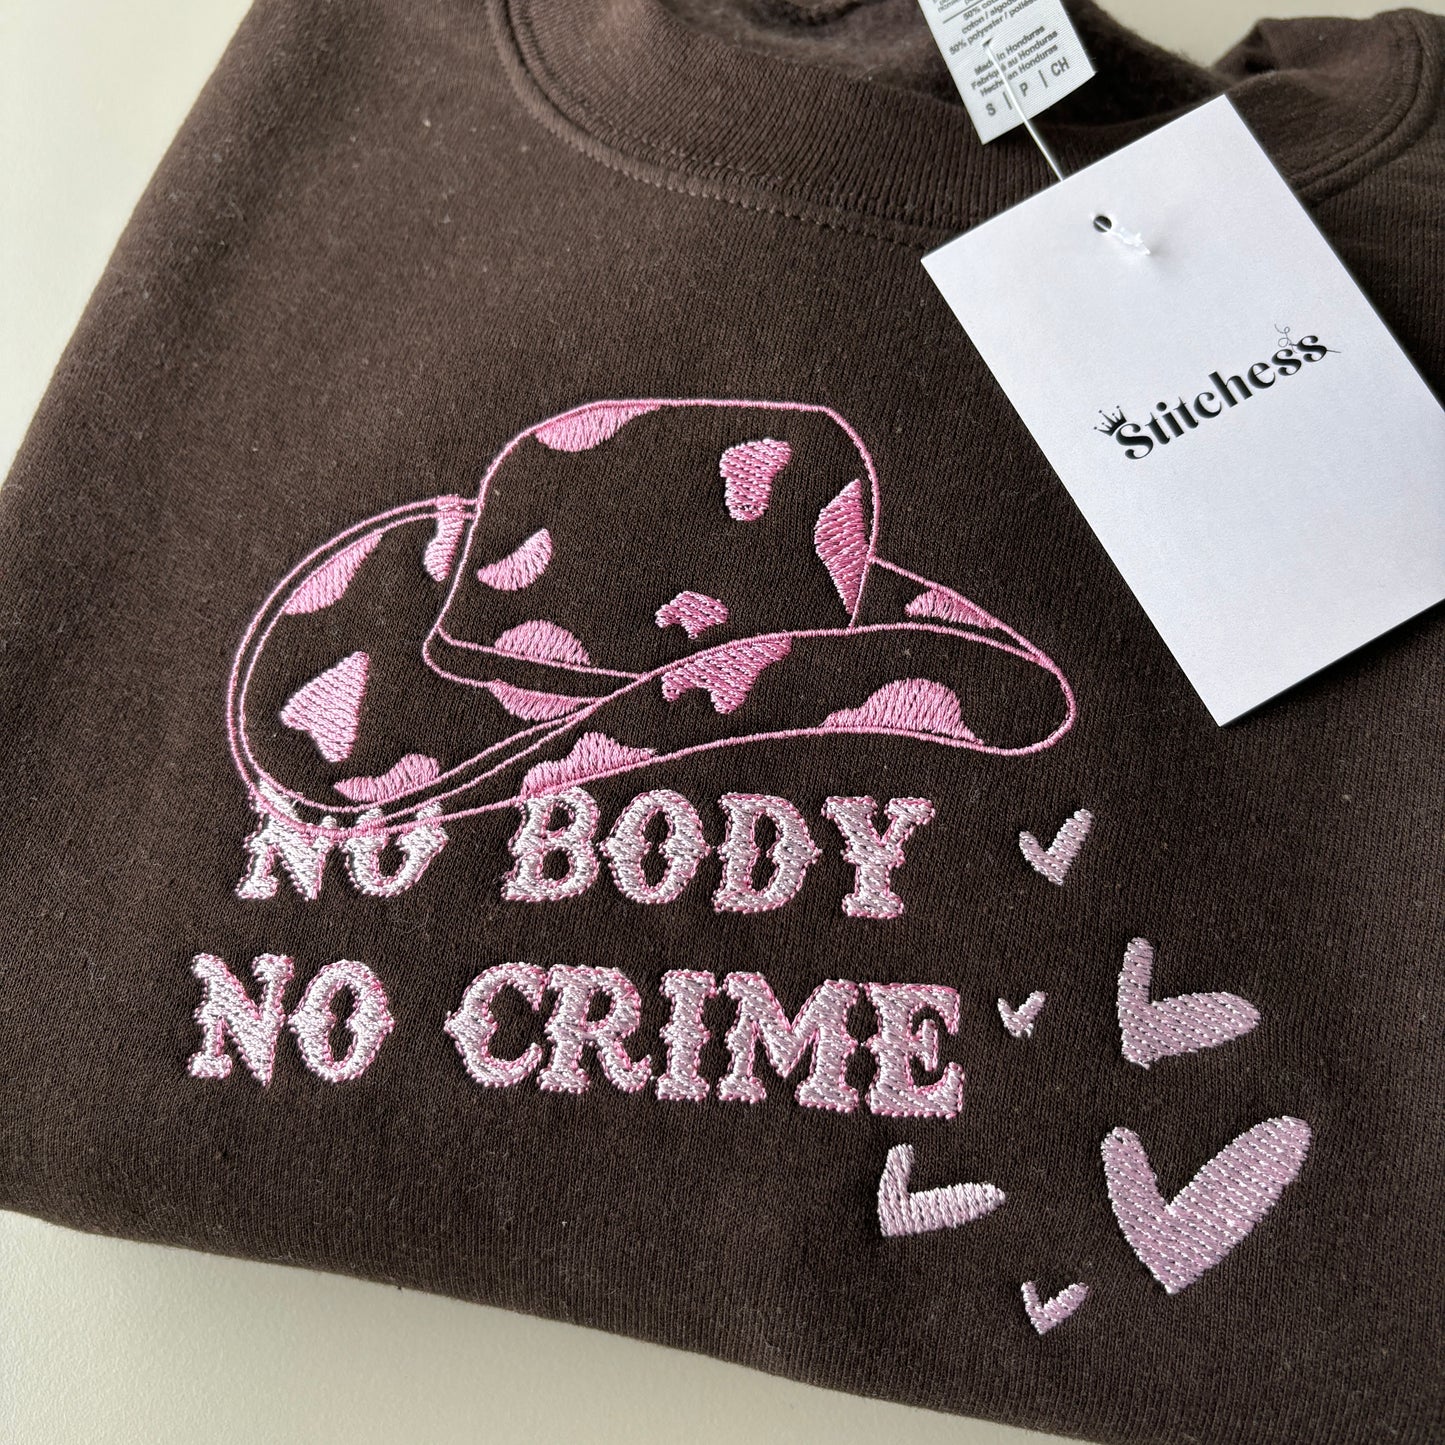 SMALL NO BODY NO CRIME EMBROIDERED SWEATSHIRT (SAMPLE)